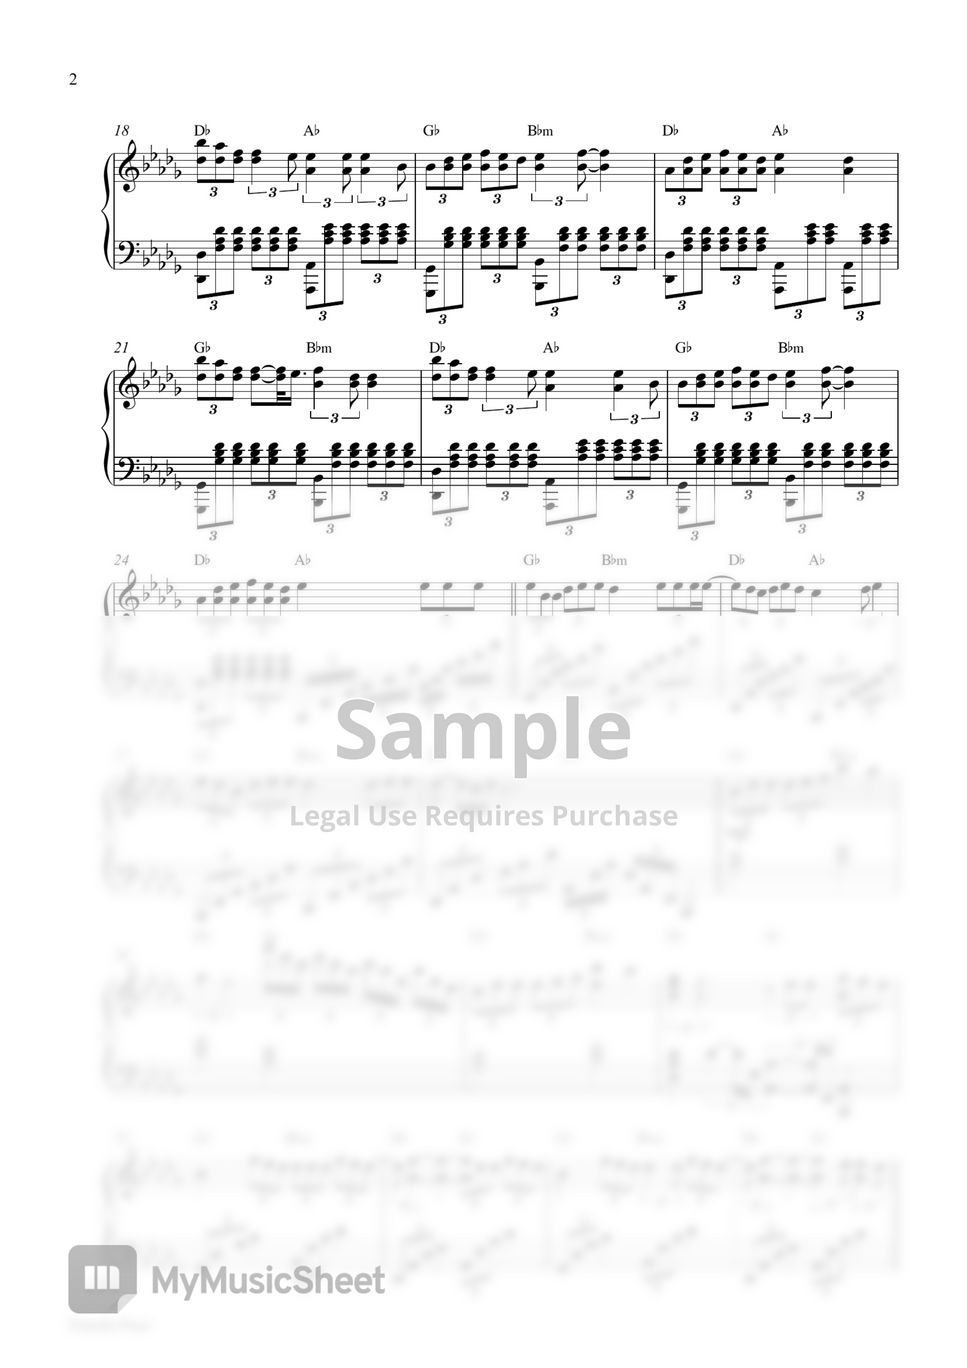 Ruth B. - Dandelions (Piano Sheet | Get 2 PDF: in Original Key Db Major & Easier Key C Major) by Pianella Piano